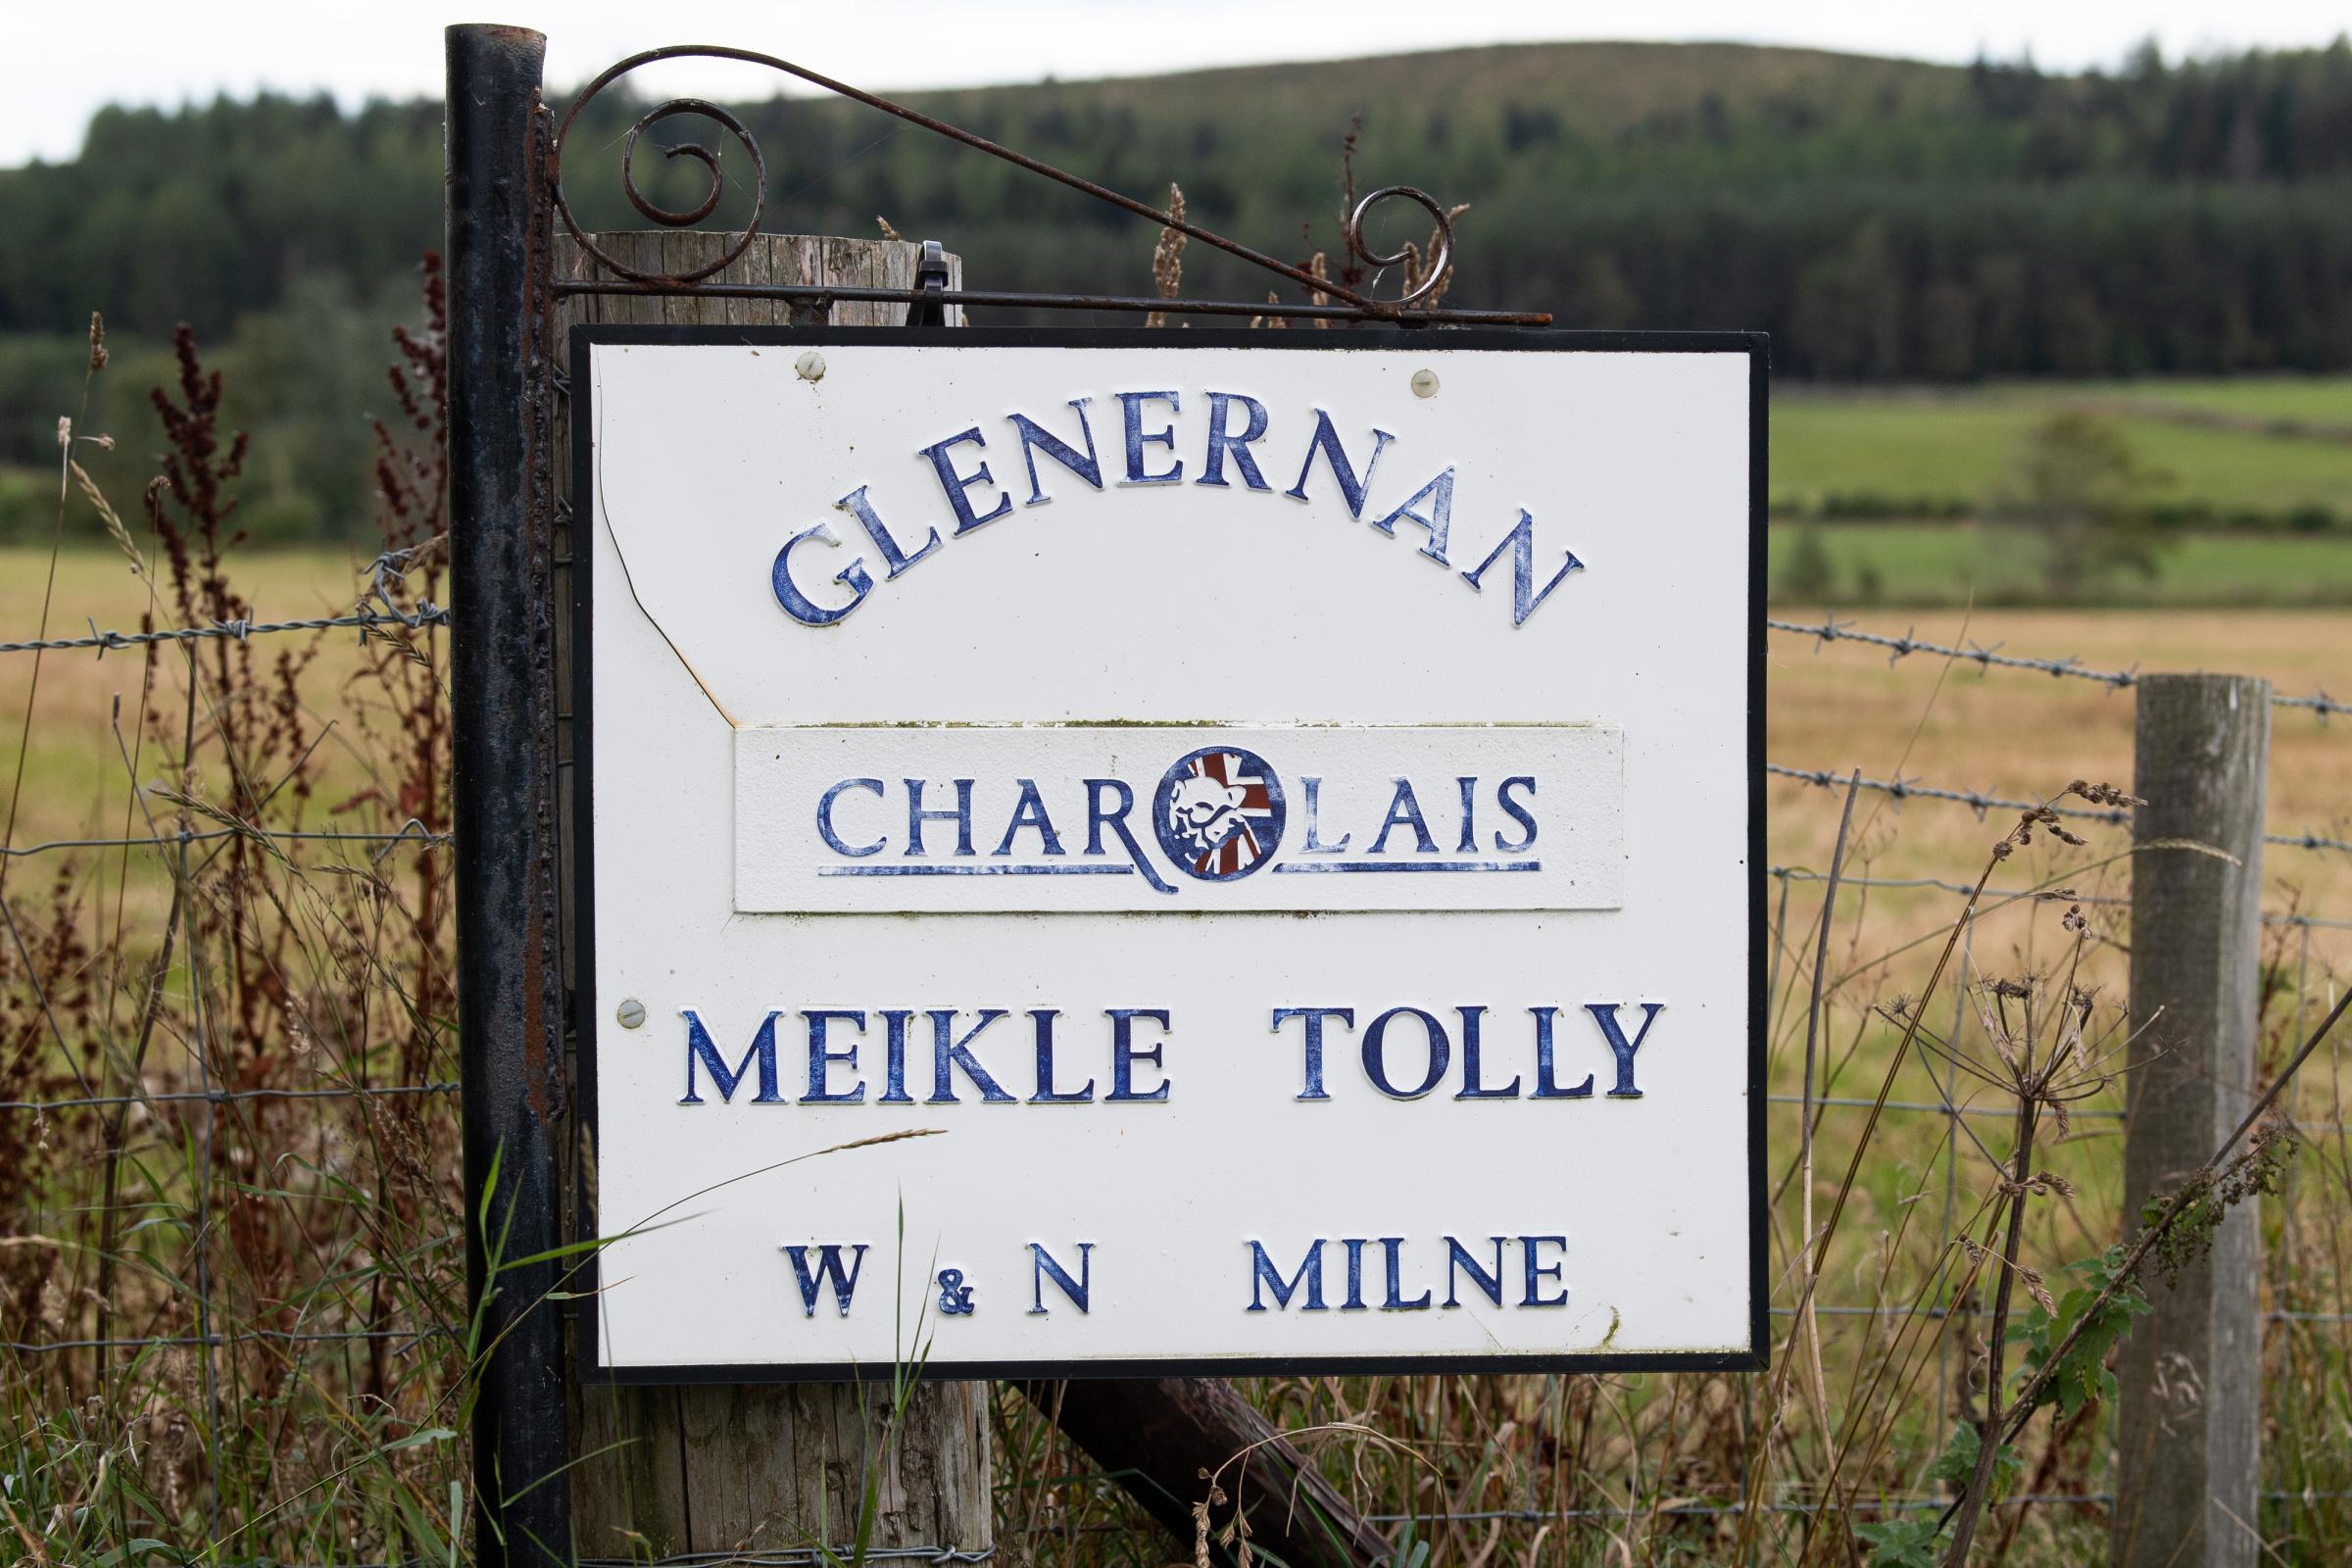 Home to the Milne family and Glenernan Charolais herd Ref:RH240921116 Rob Haining / The Scottish Farmer...